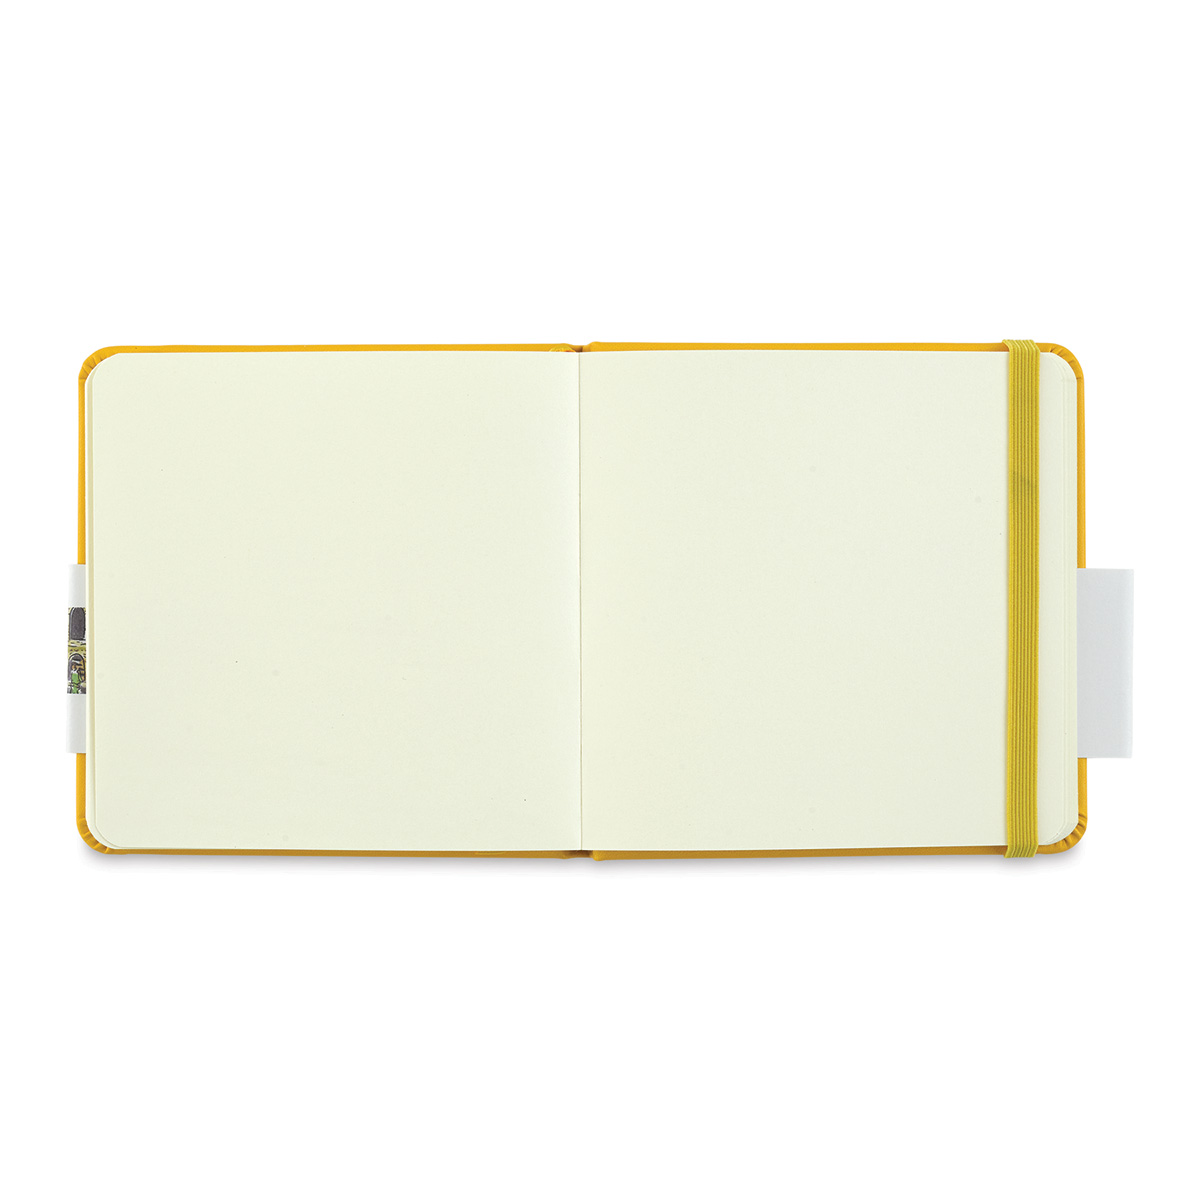 Sketchbook Golden Yellow 21 x 29.7 cm 140 g 80 Sheets